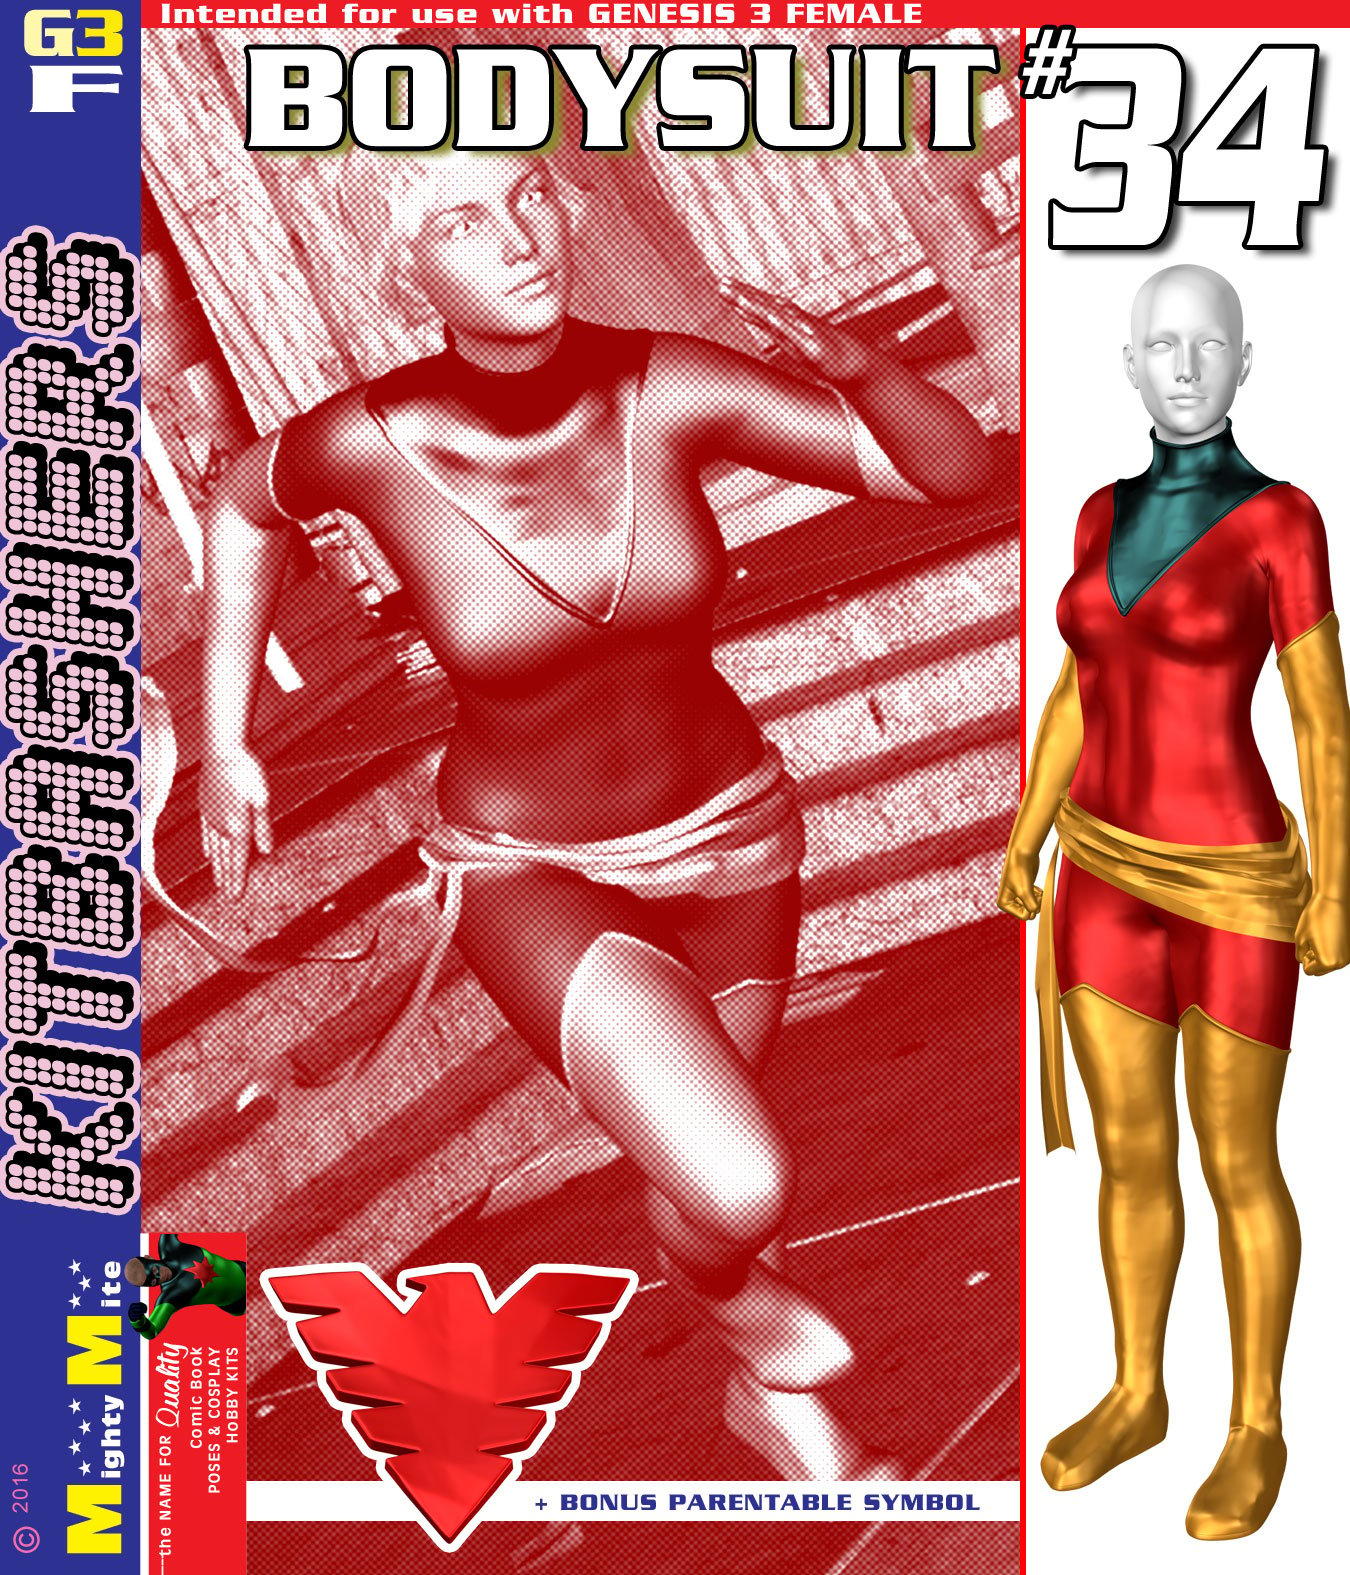 Bodysuit 034 MMKBG3F by: MightyMite, 3D Models by Daz 3D